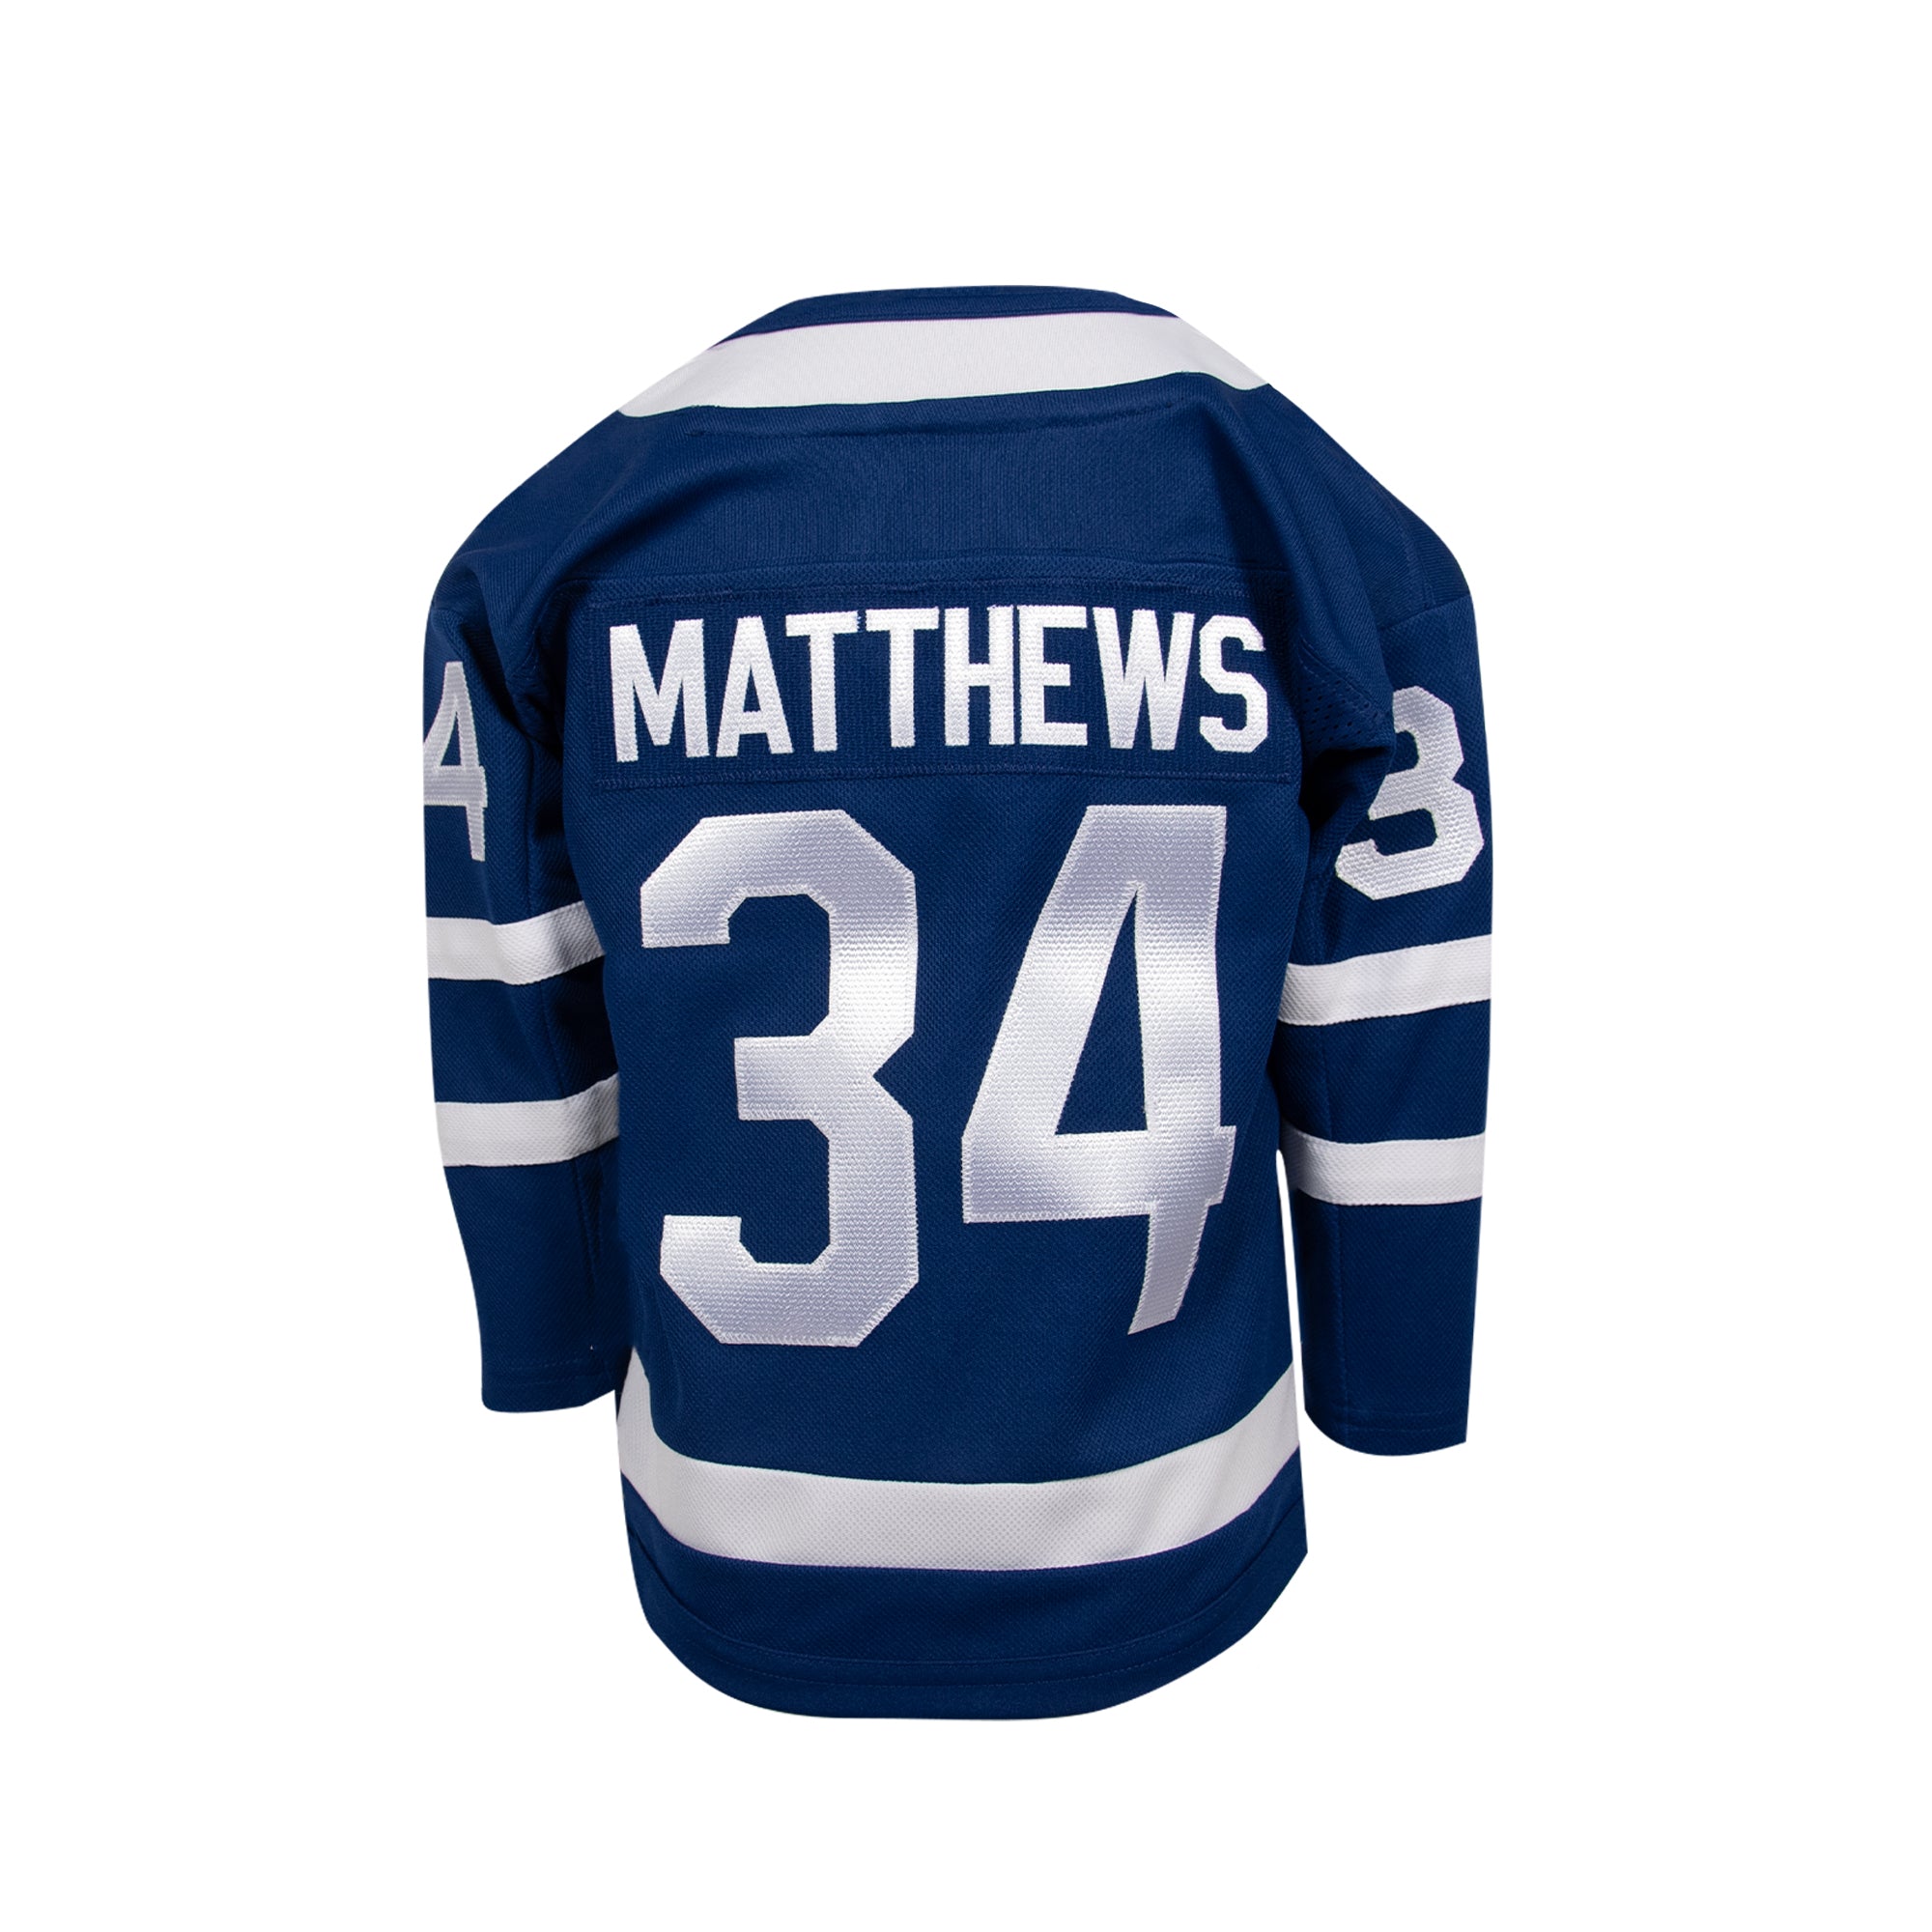 Maple Leafs Kids Home Jersey - Matthews